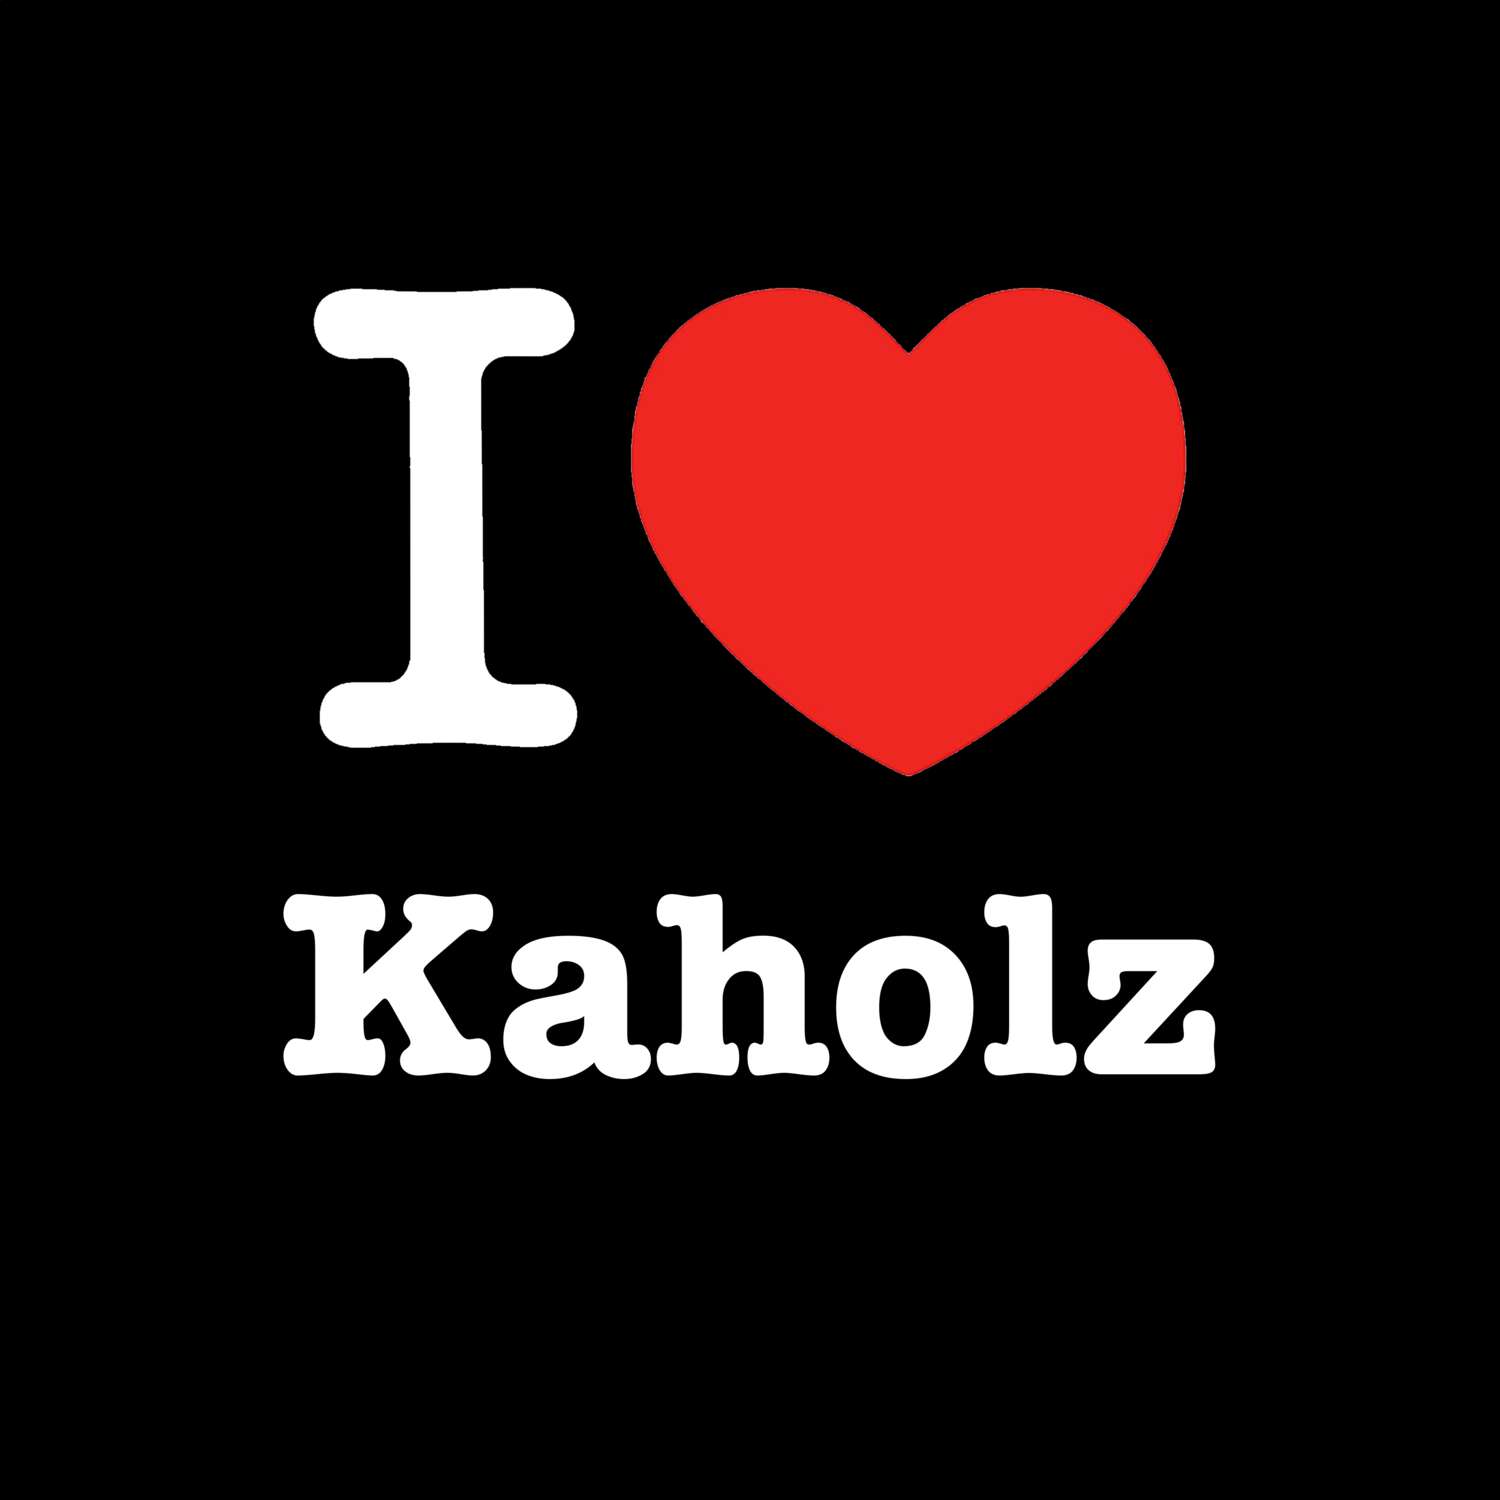 Kaholz T-Shirt »I love«